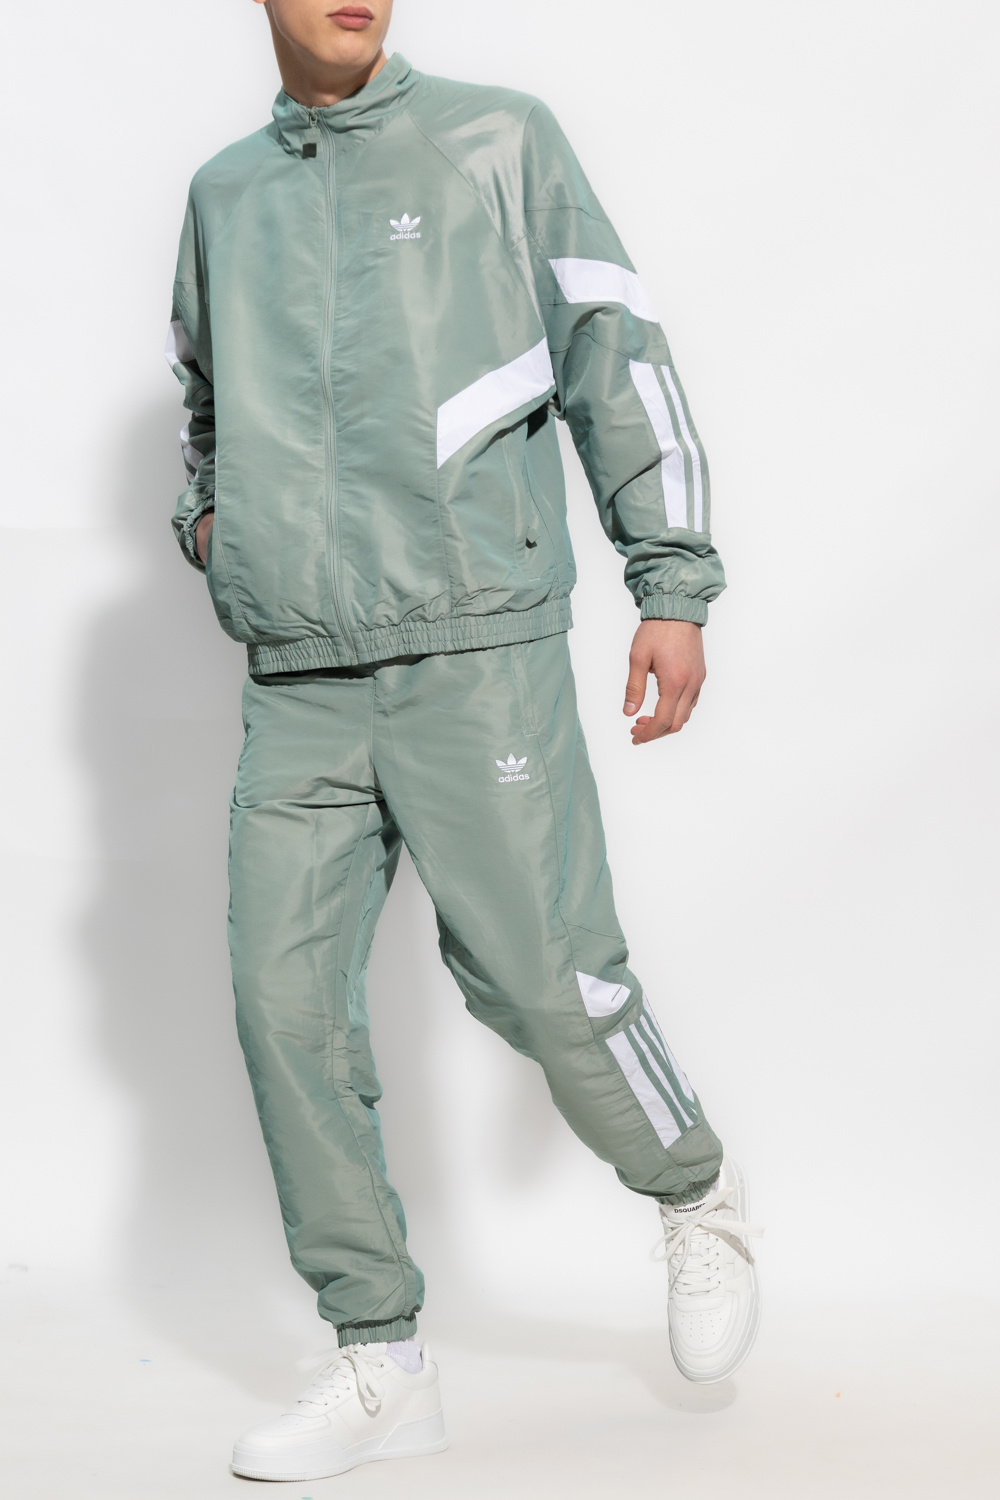 adidas Ultra BOOST Nerf - IetpShops Germany - Green Track pants with logo  ADIDAS Originals